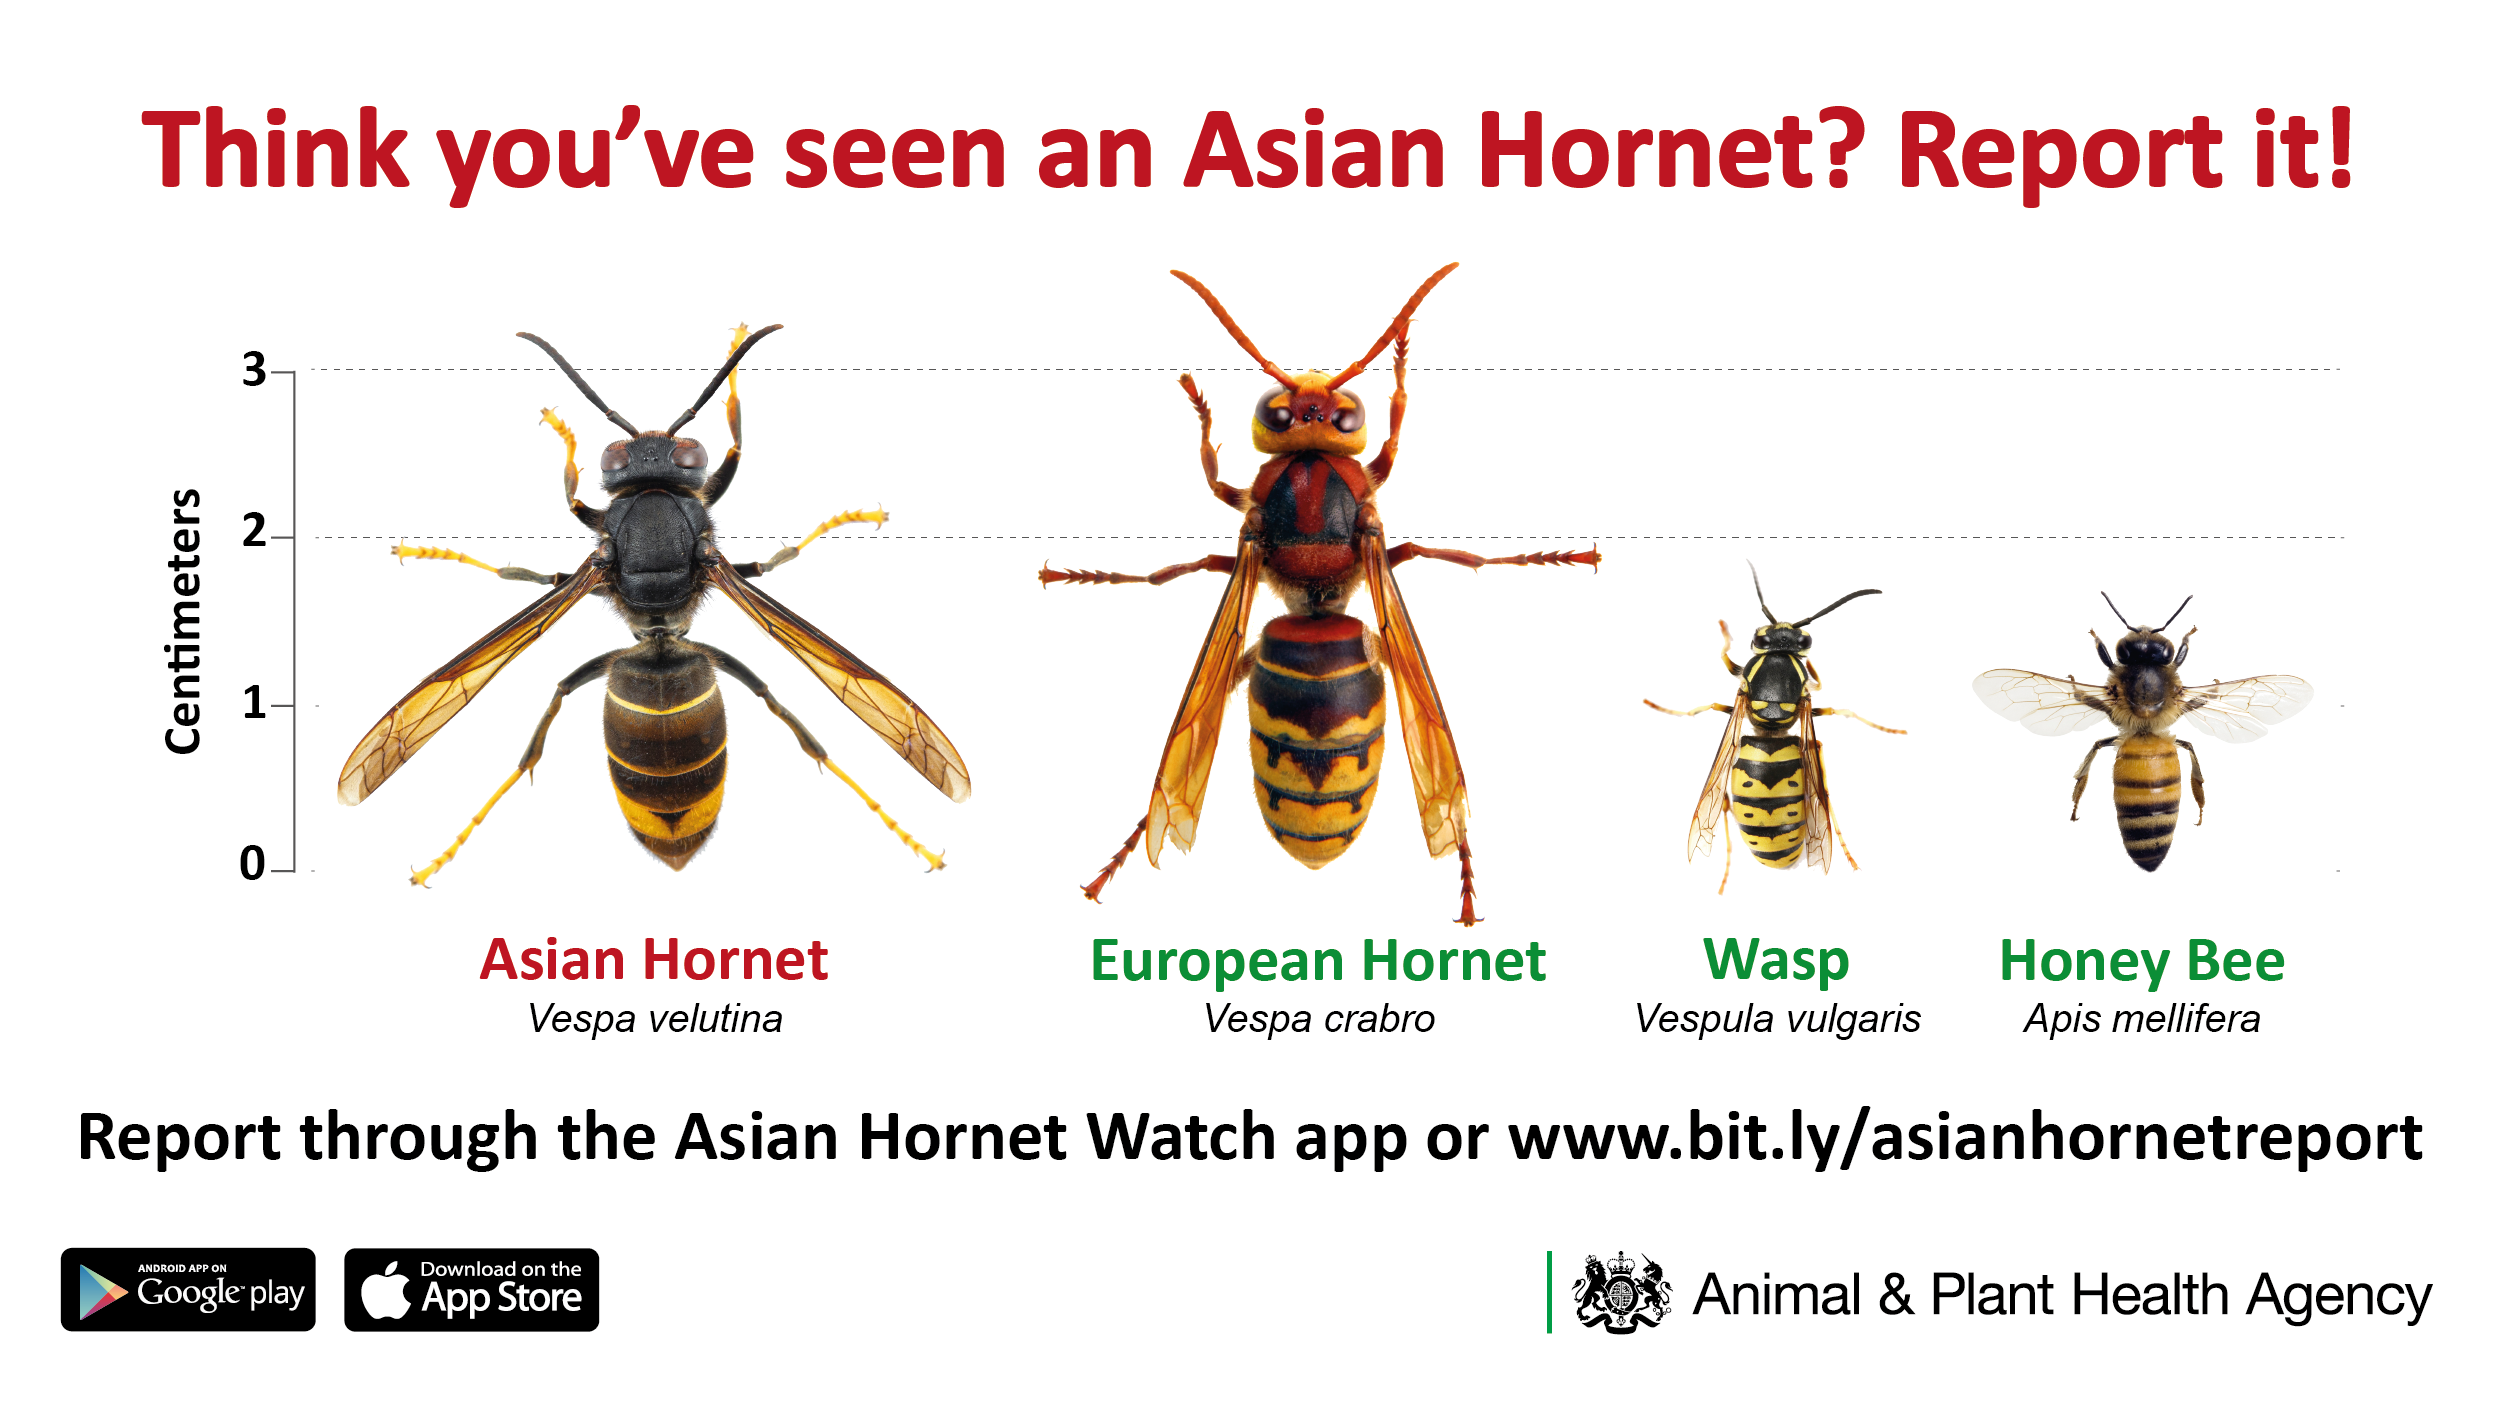 Image of asian hornet, European hornet, wasp and honey bee.